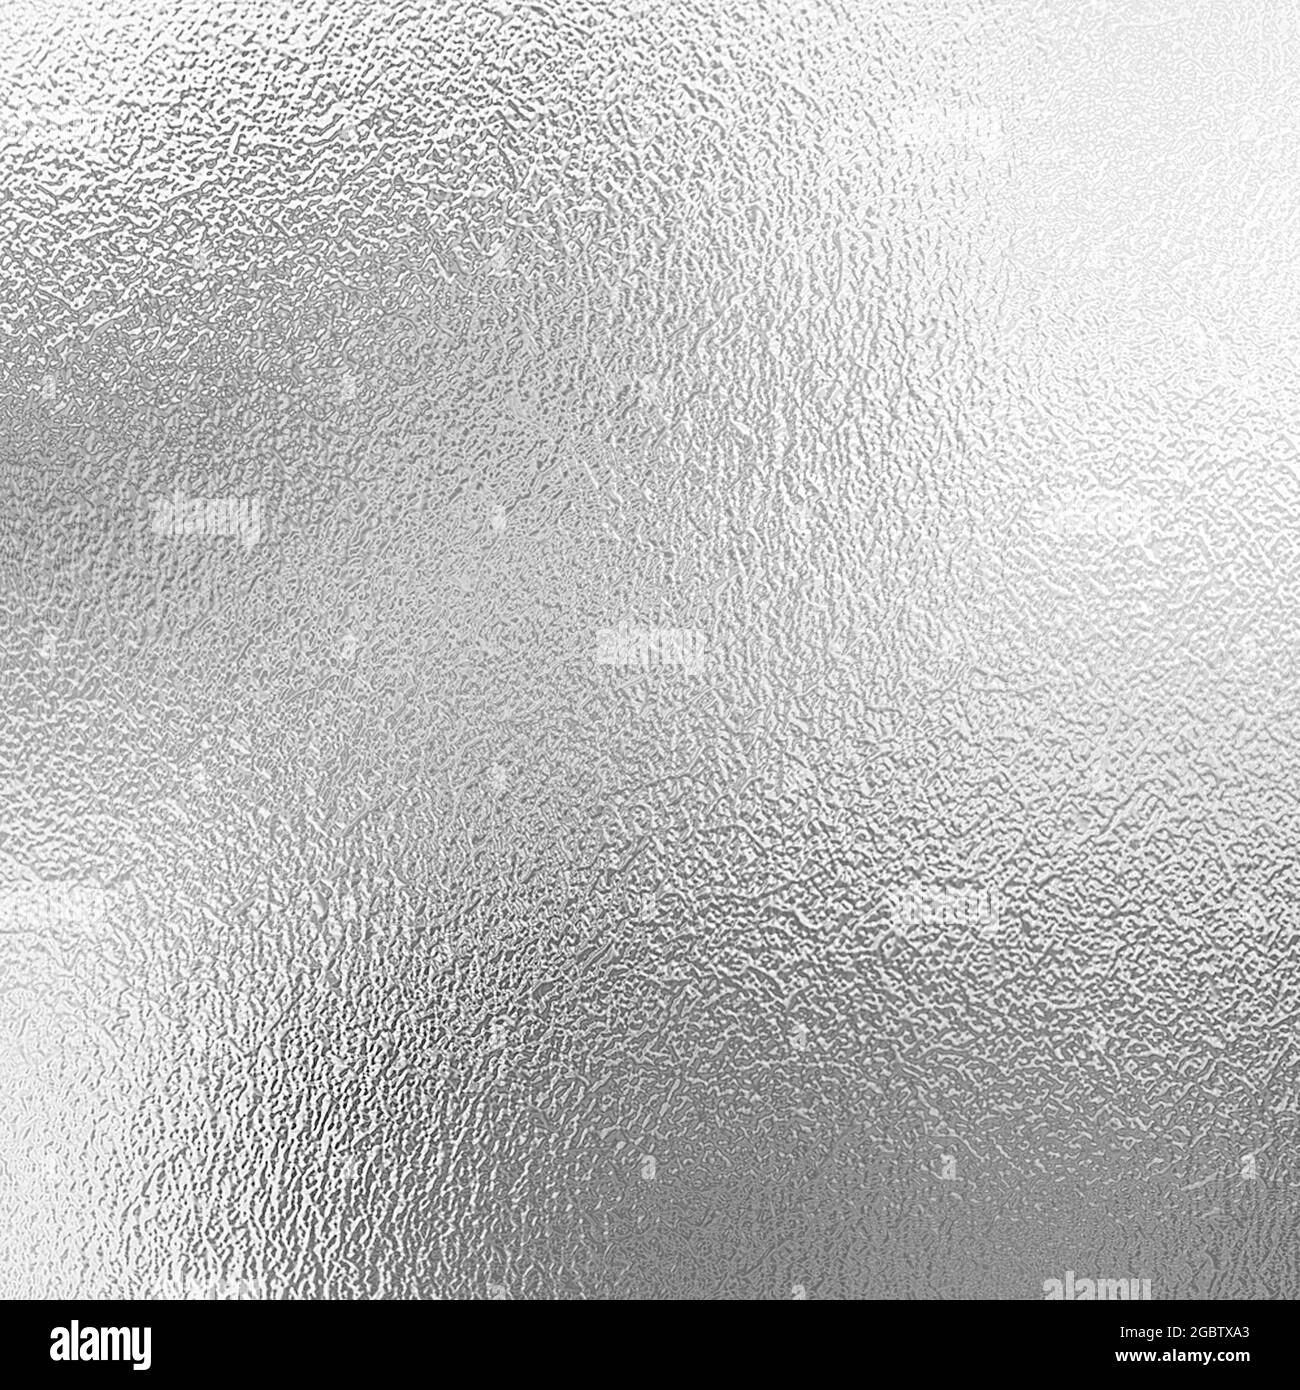 Silver Foil Decorative Texture Background Stock Photo - Download